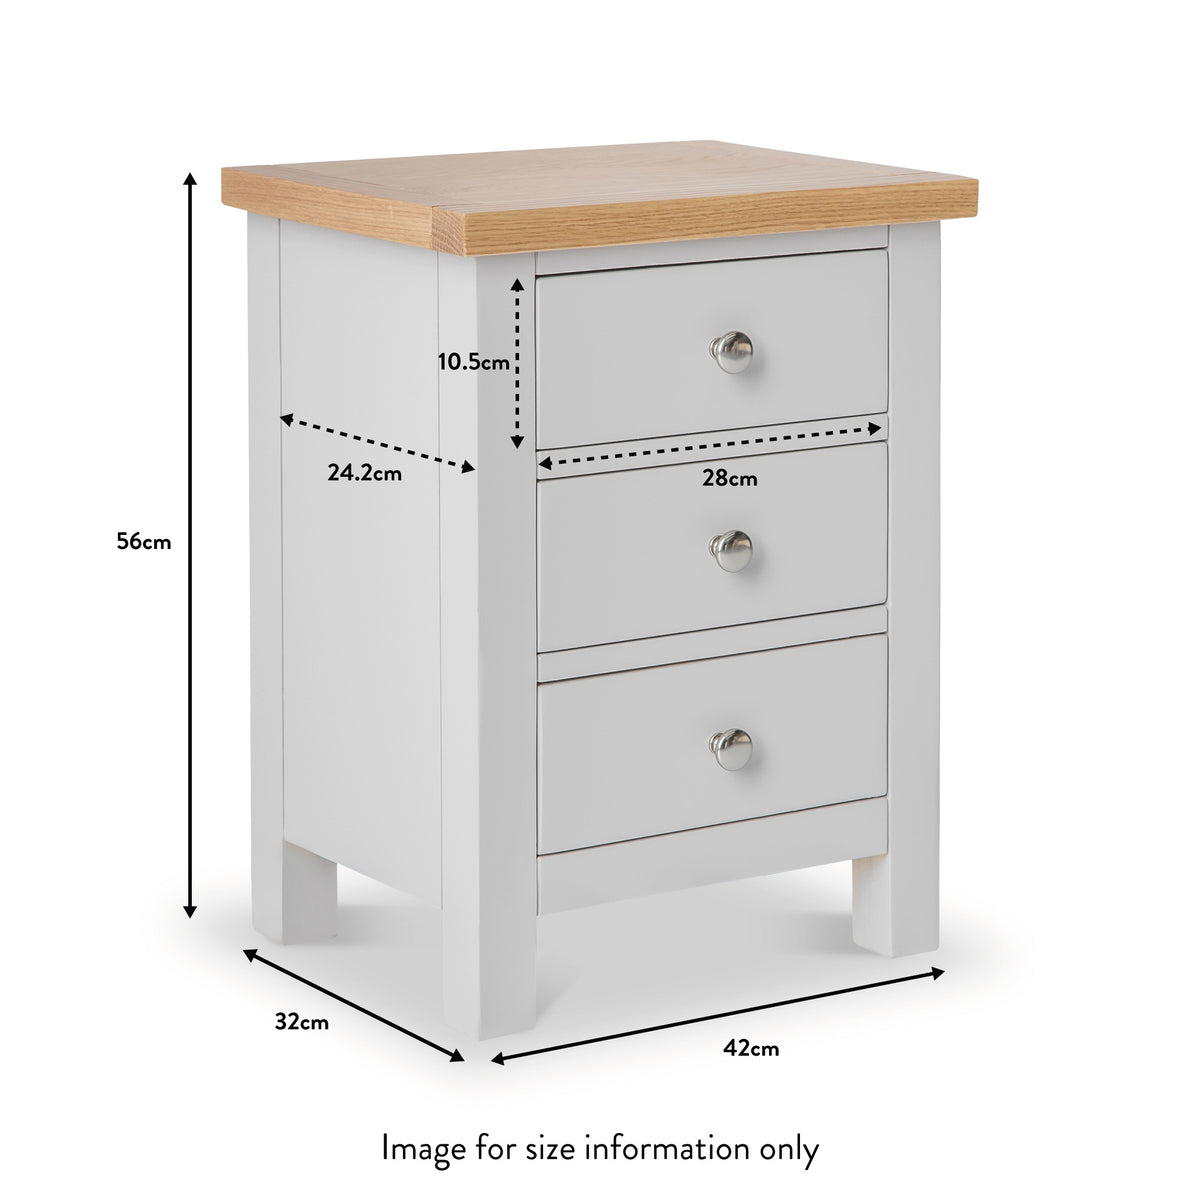 Farrow Grey Bedside Table dimensions